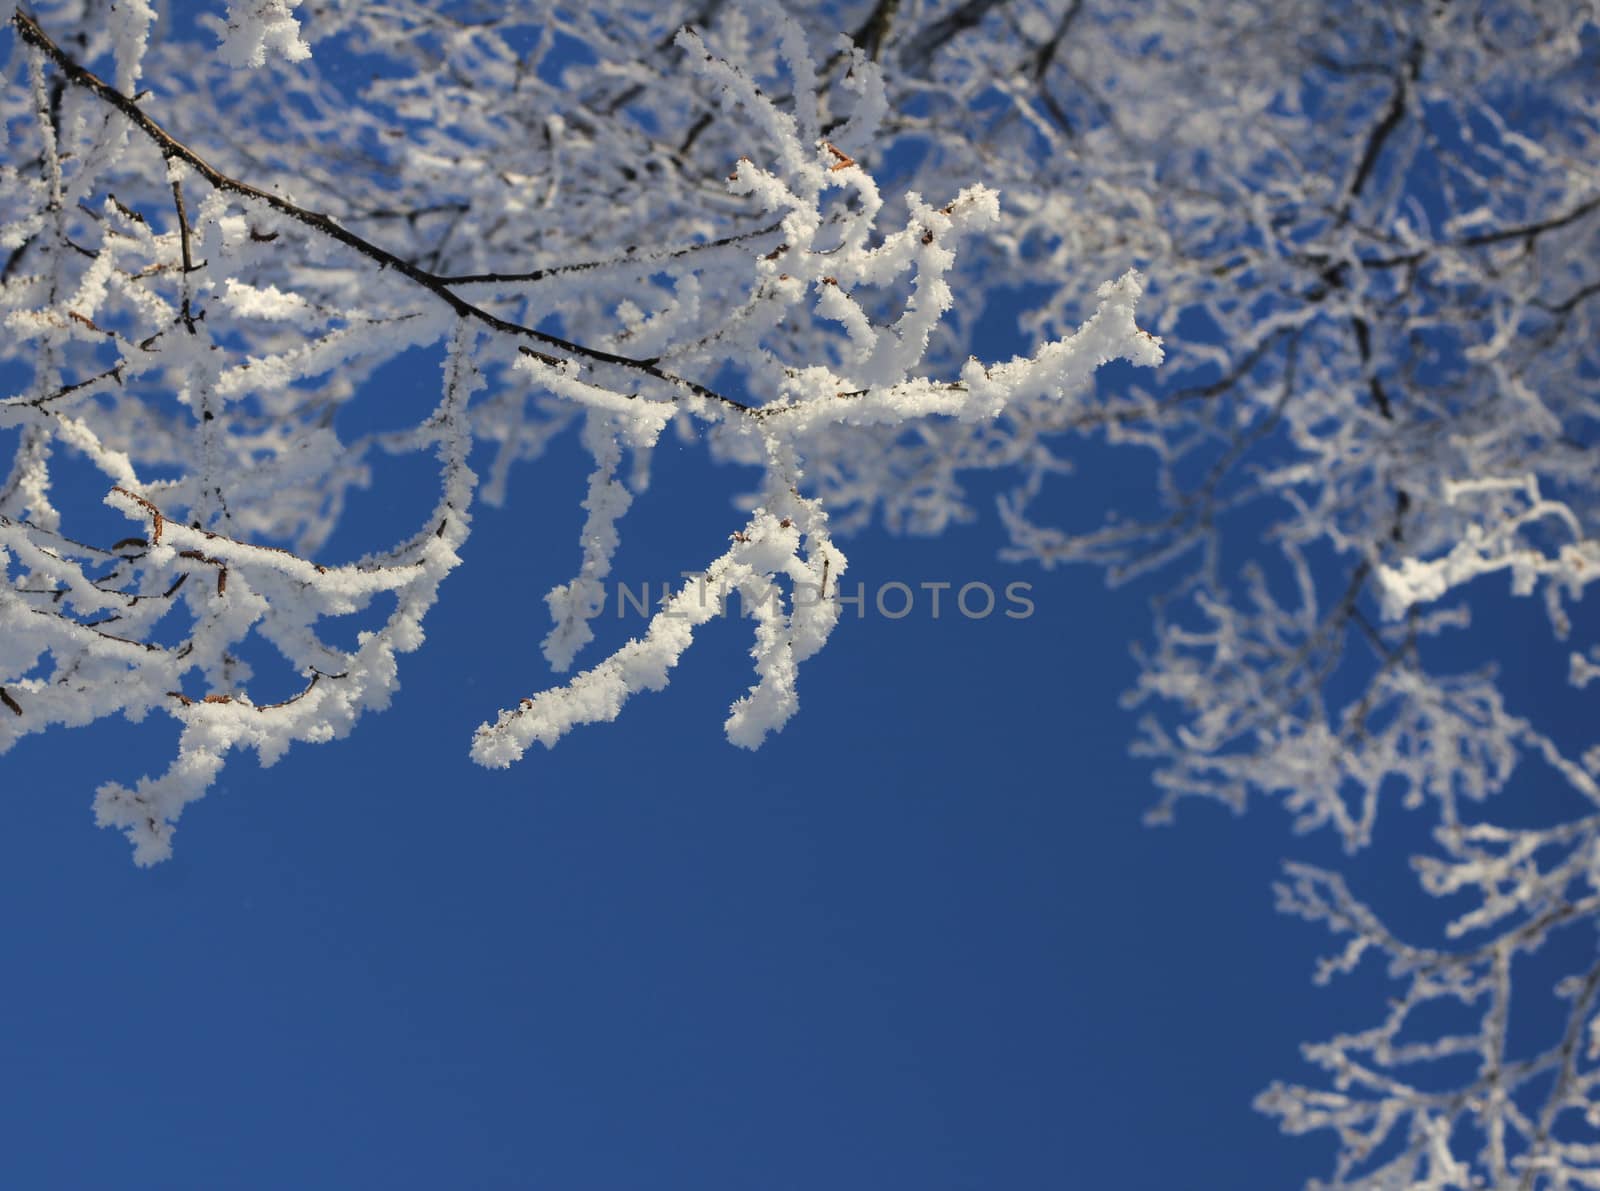 Frozen branches against blue sky by anterovium